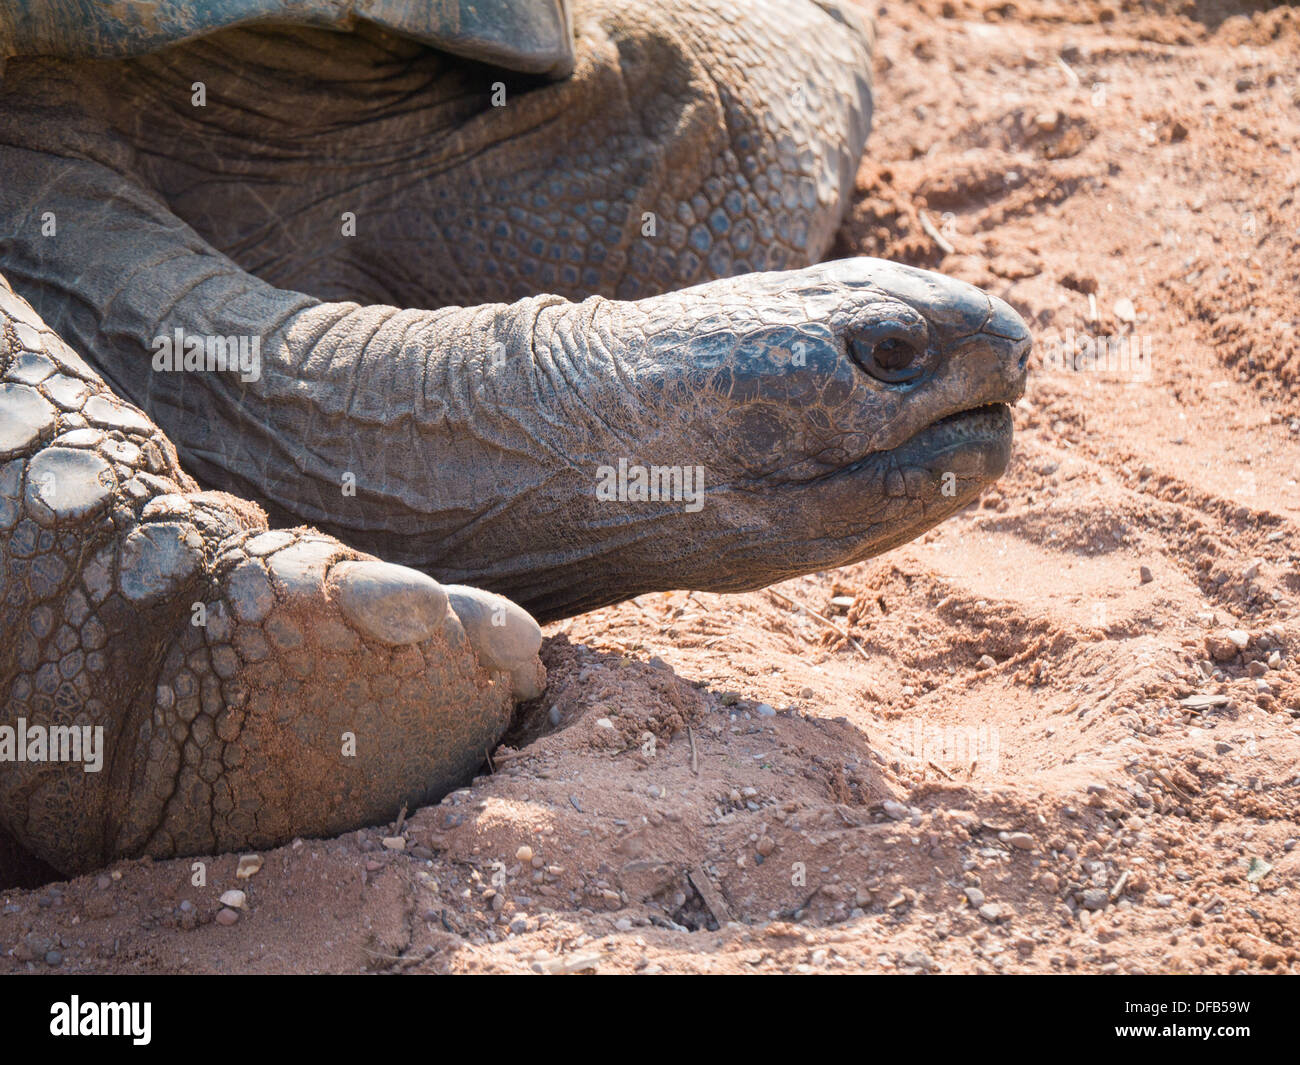 The Aldabra Giant Tortoise (Aldabrachelys Gigantea) at Twycross Zoo, Tamworth, United Kingdom. Stock Photo